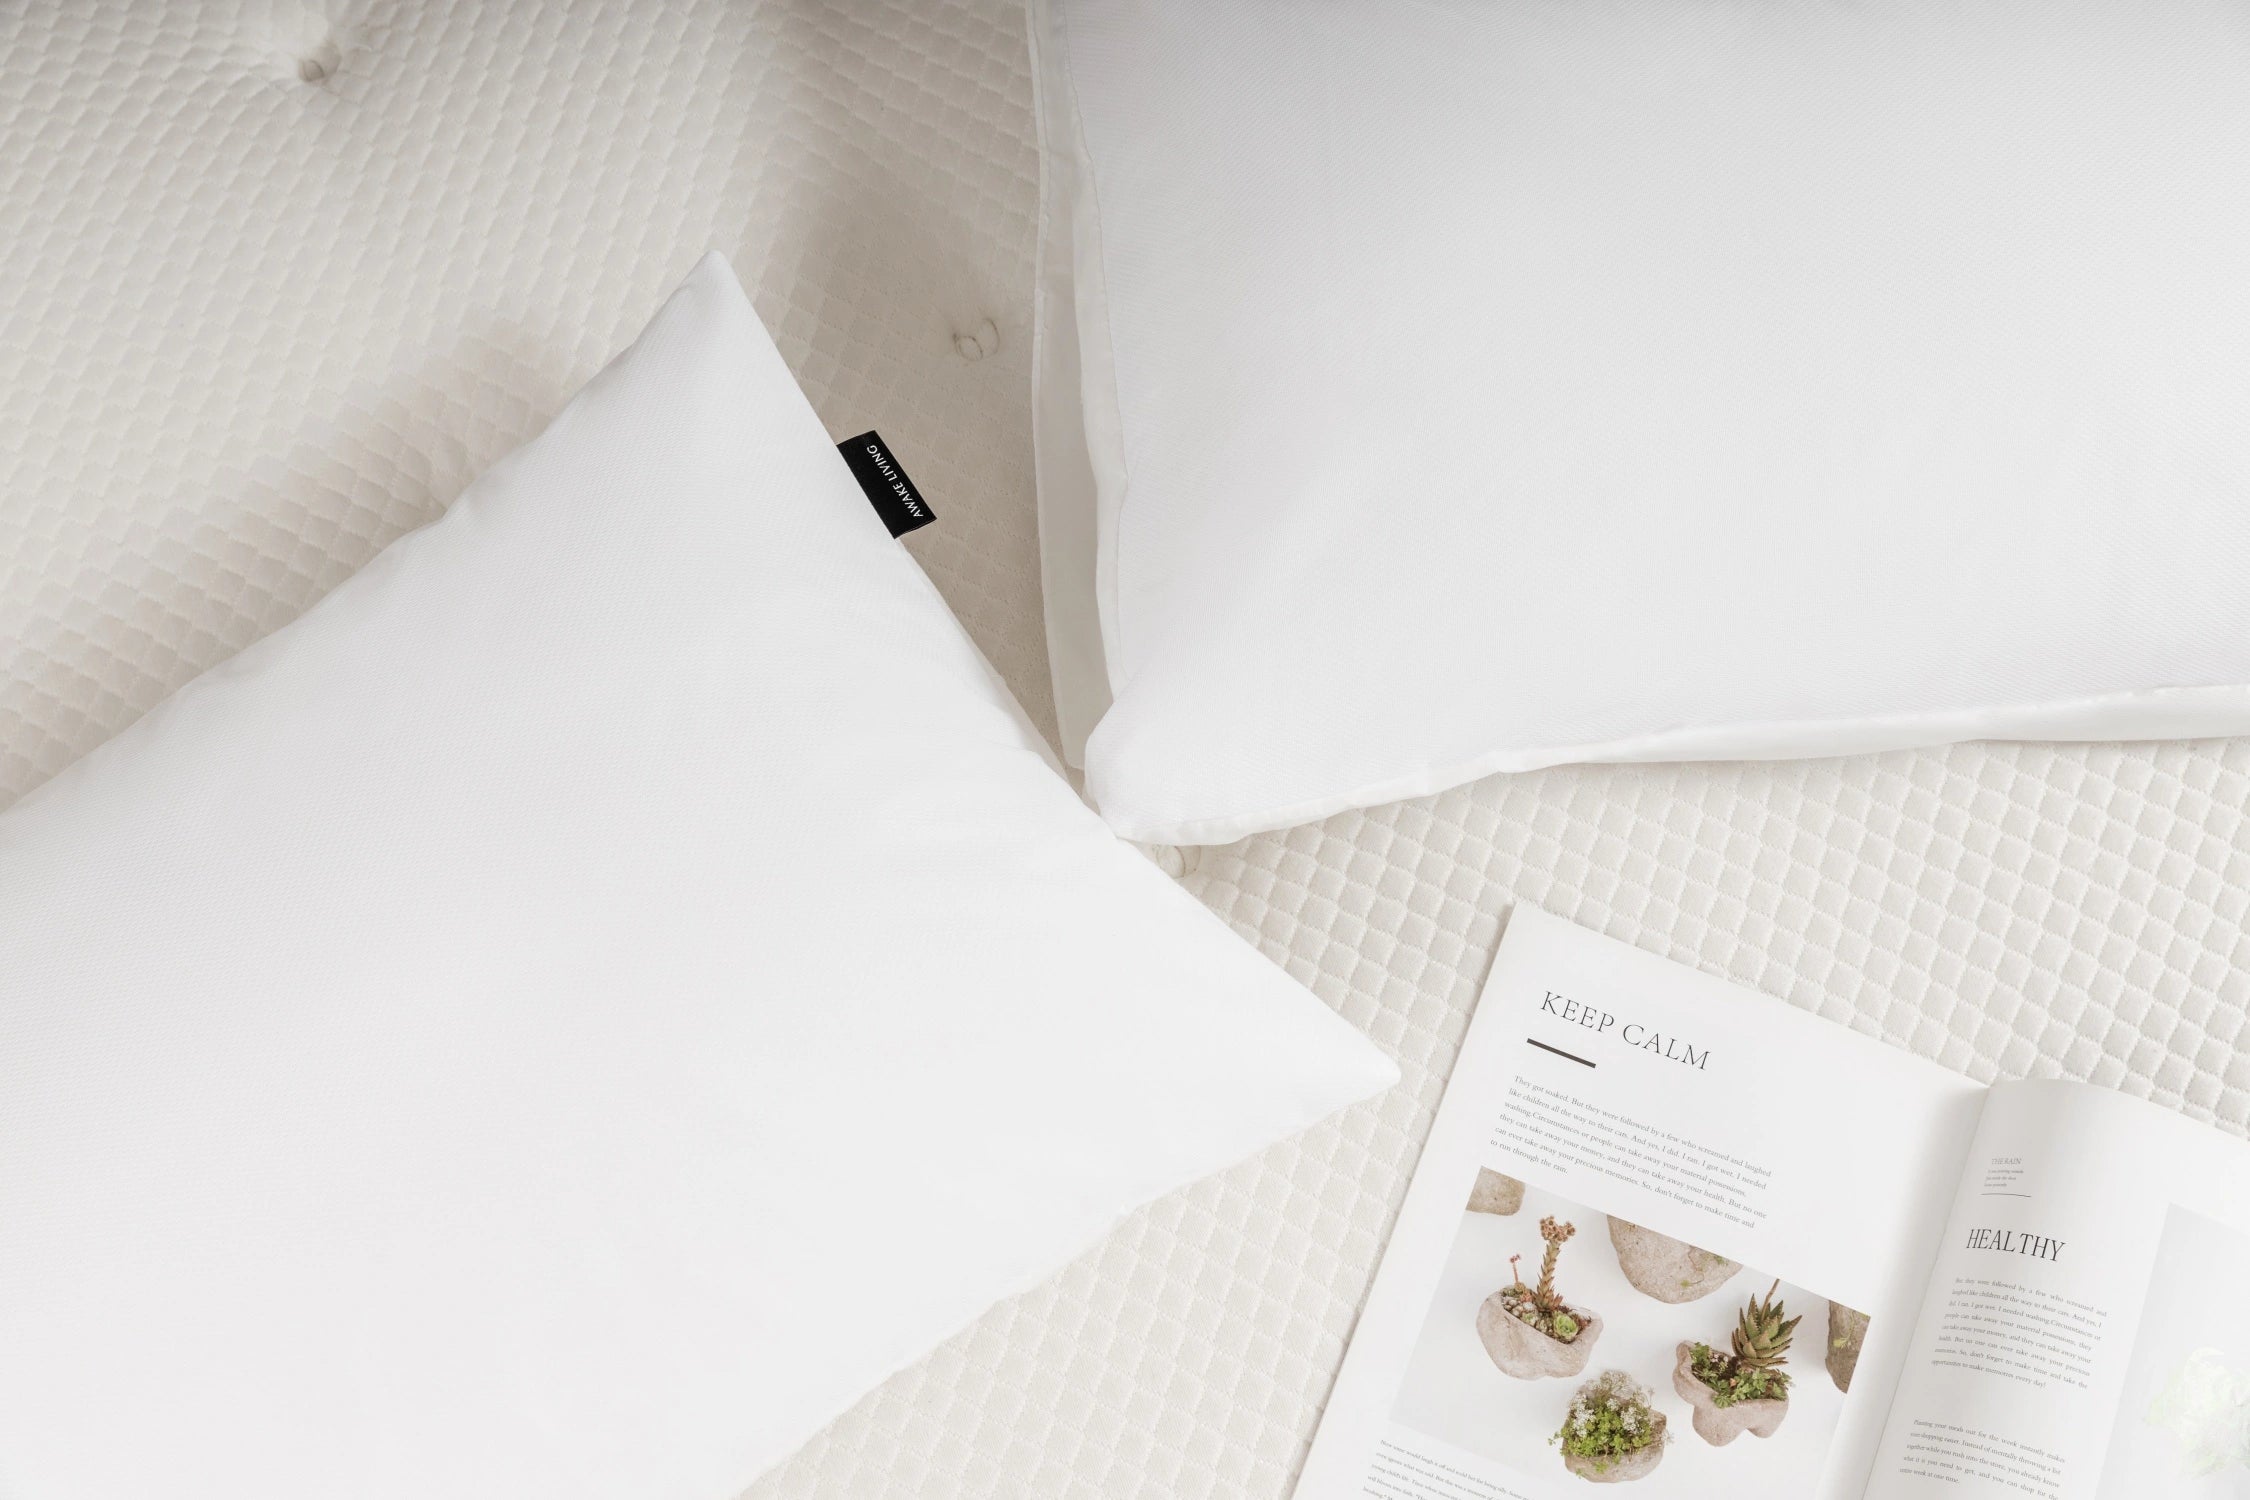 3M 專利超薄透氣防水防蟎枕頭保潔墊情境照 - 3